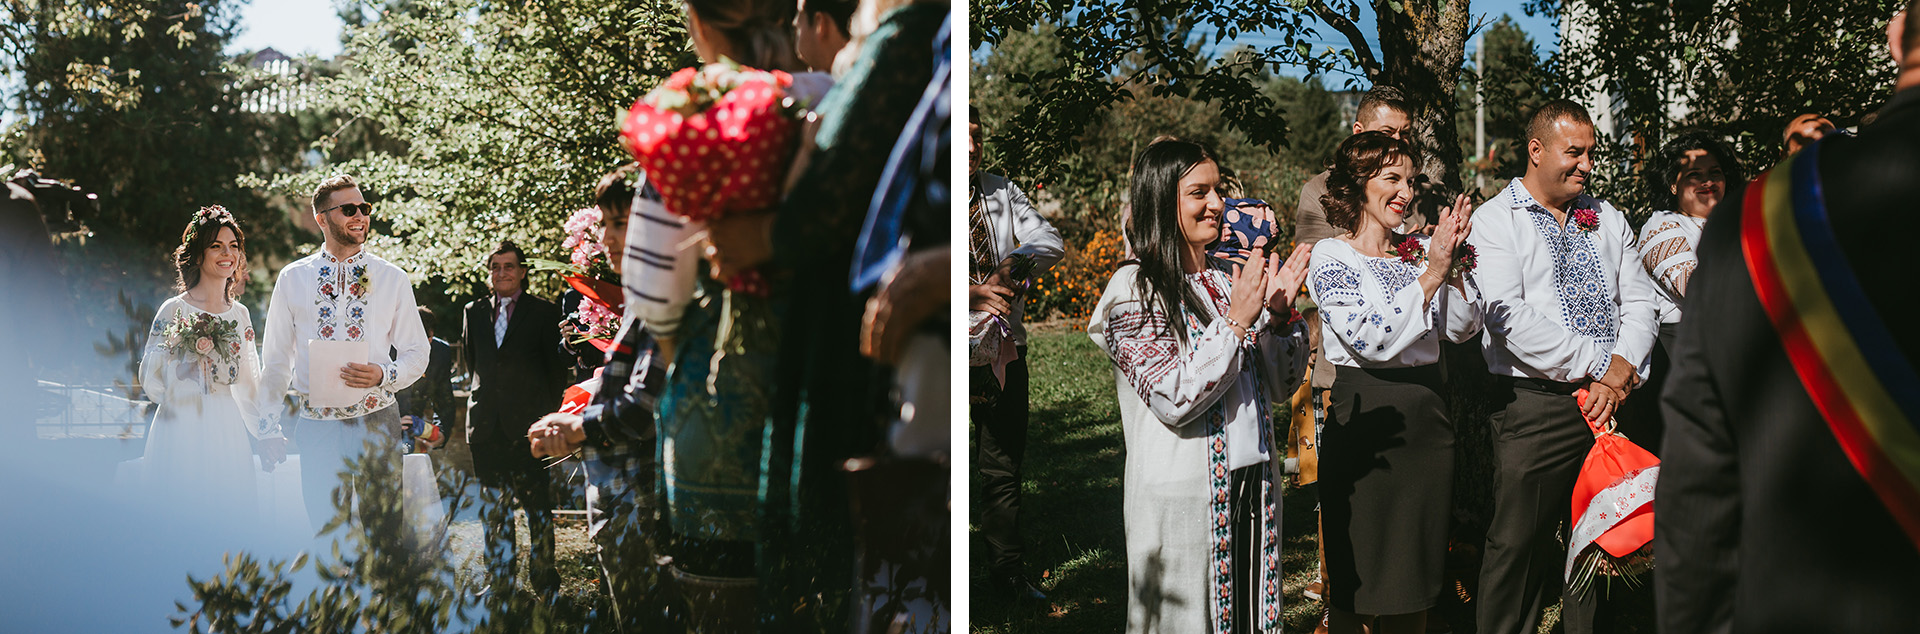 De ce sa ai 2 fotografi de nunta | youngcreative.info media © Dan Filipciuc, Cristina Bejan | fotografie de nunta in Iasi si de destinatie